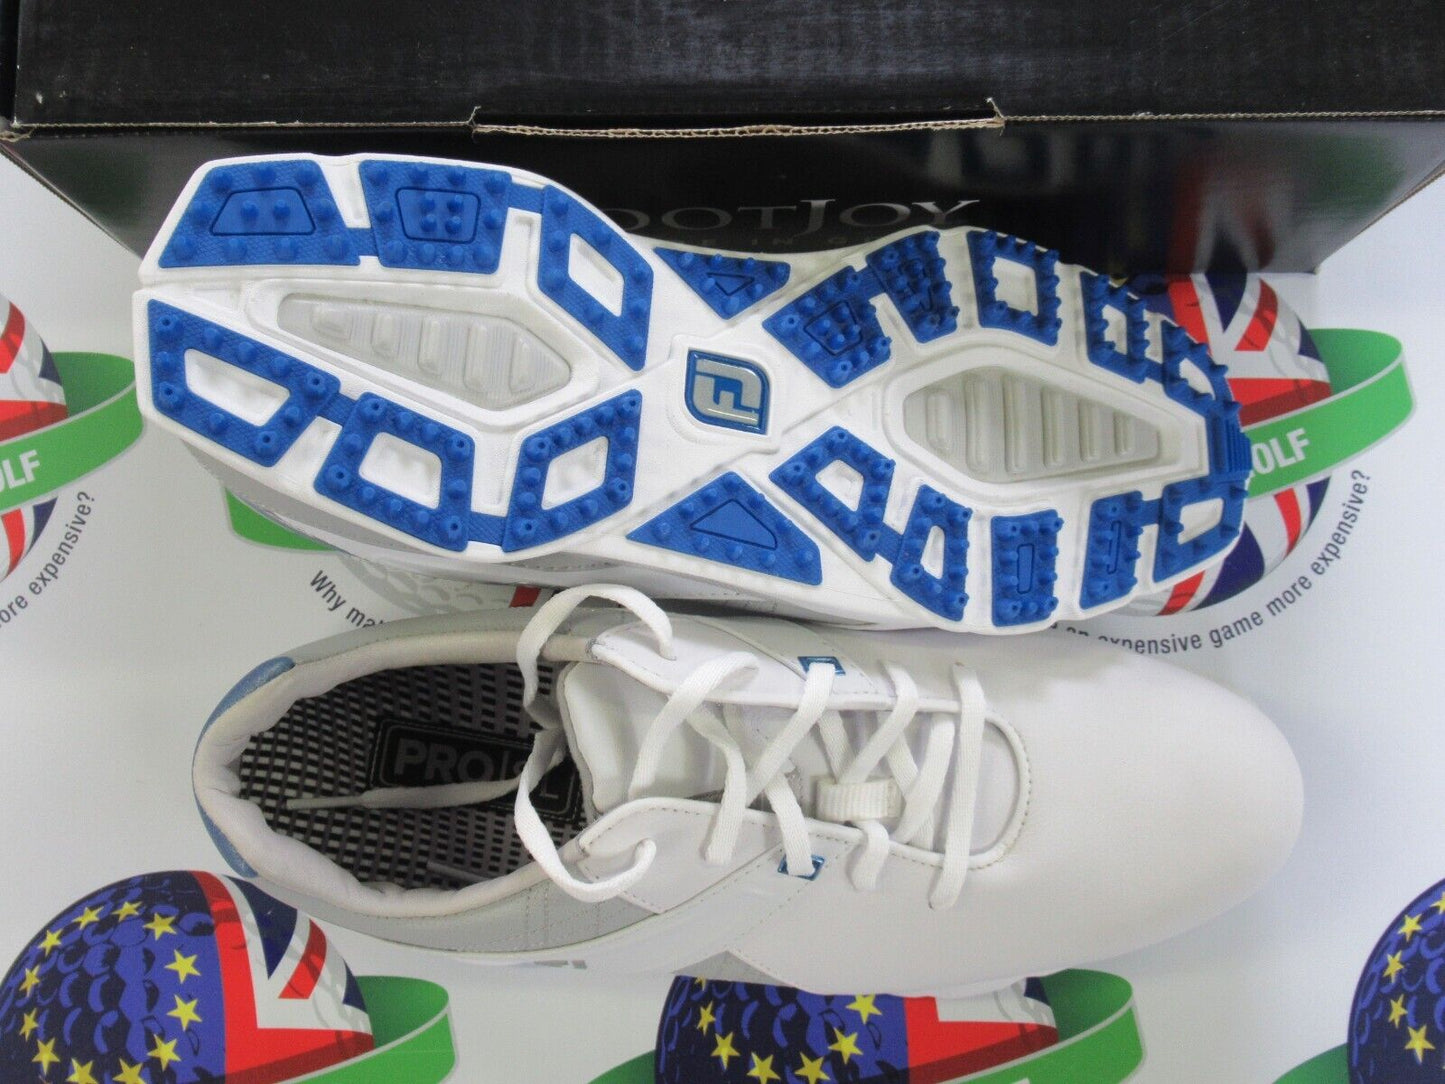 footjoy pro sl waterproof golf shoes 53811k white/grey/blue uk size 8.5 medium